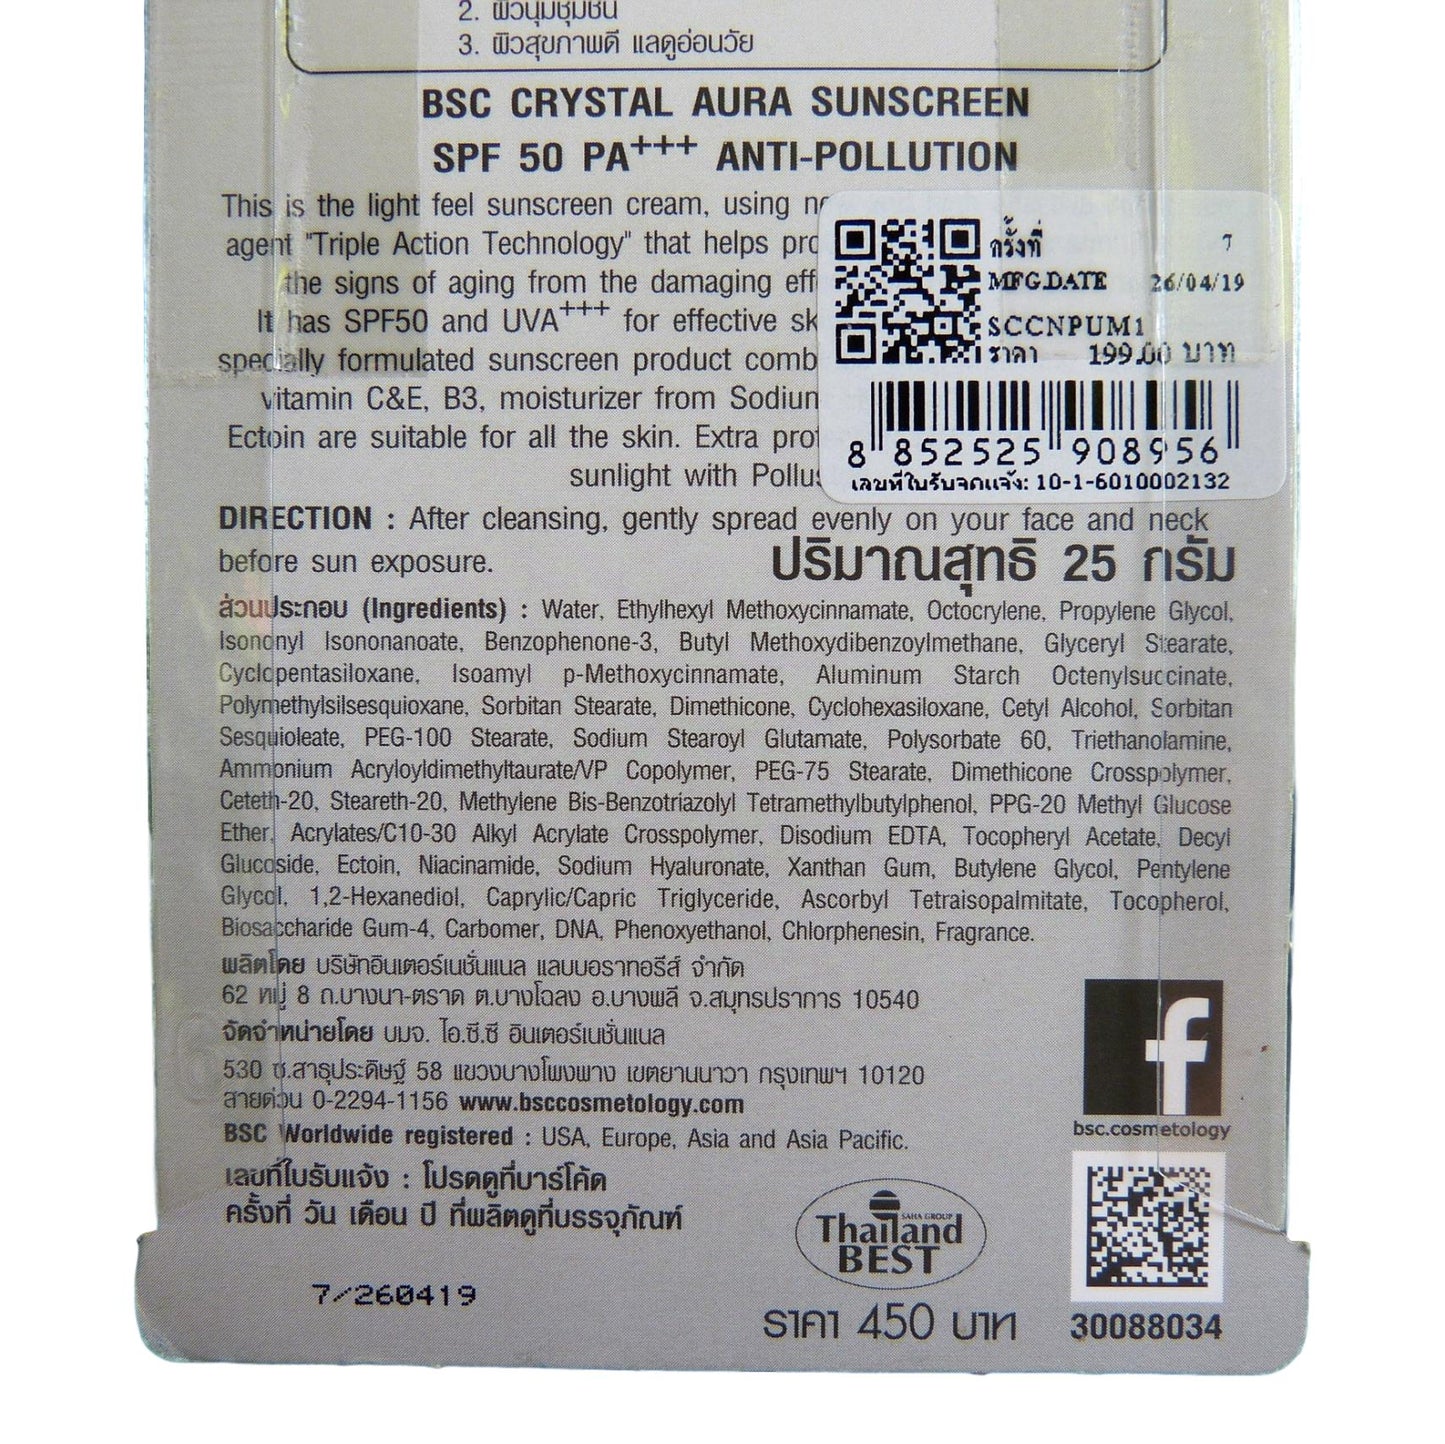 BSC Cosmetology Crystal Aura Anti Pollution Sunscreen SPF 50 - Asian Beauty Supply